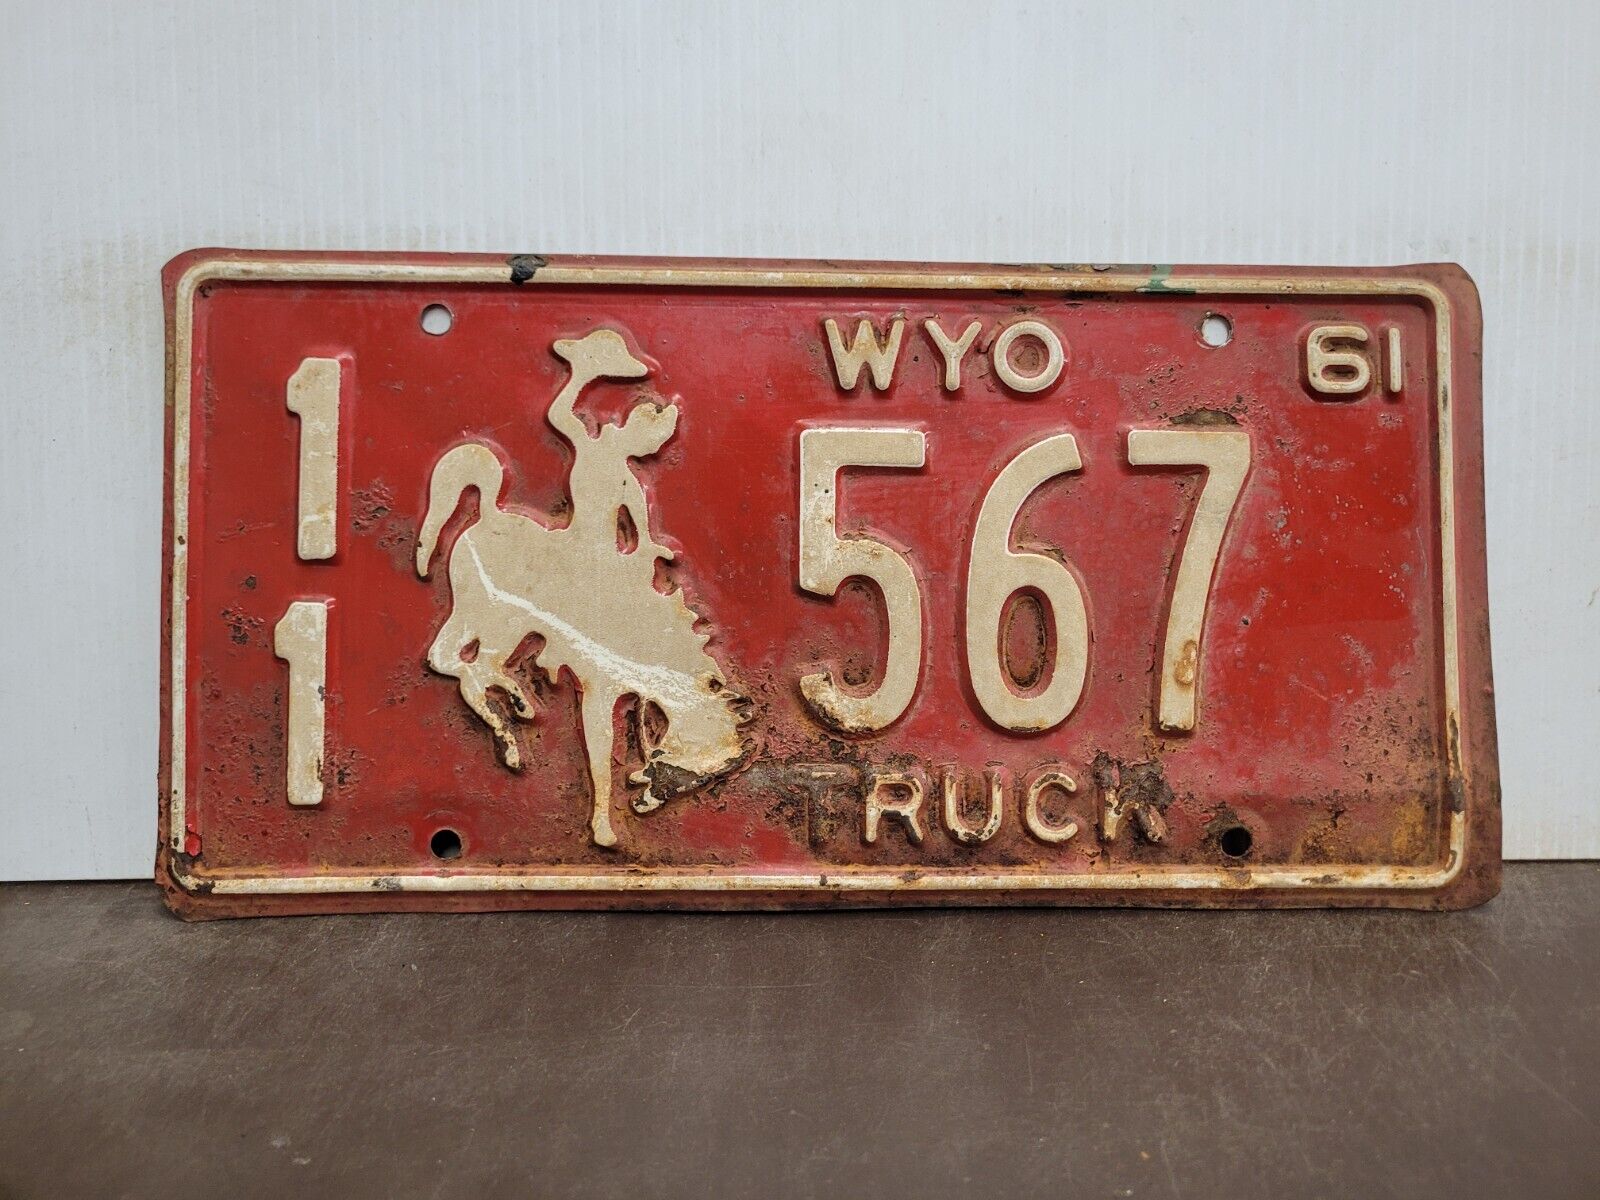 1961 Wyoming TRUCK License Plate Tag Original.